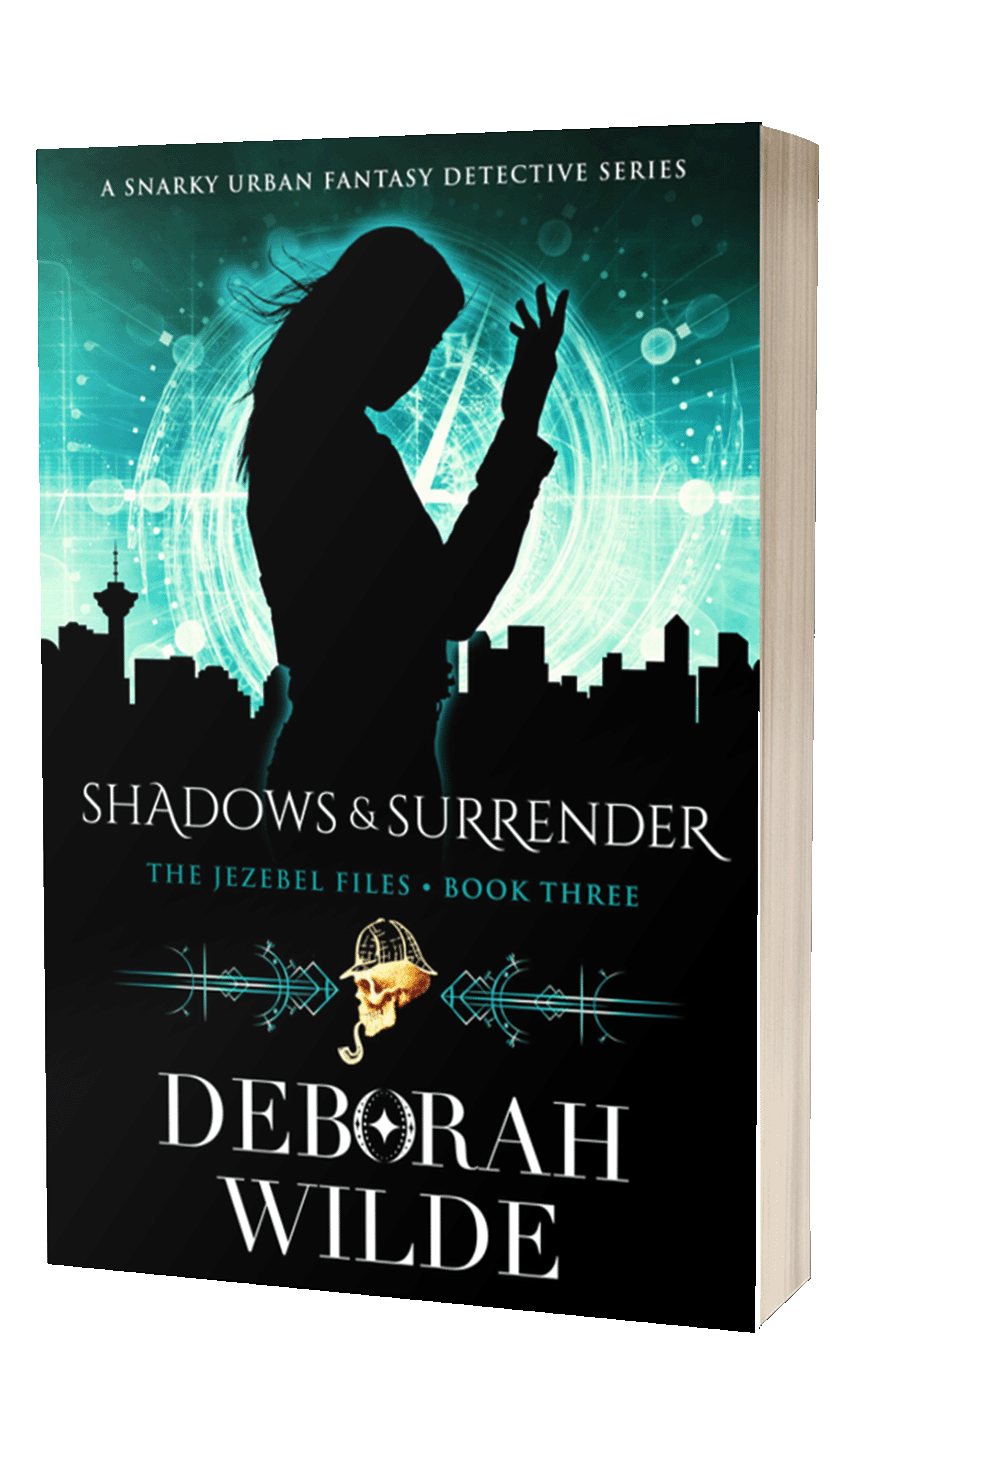 Paperback of Shadows & Surrender, book 3 in The Jezebel Files, an urban fantasy detective fiction by Deborah Wilde.